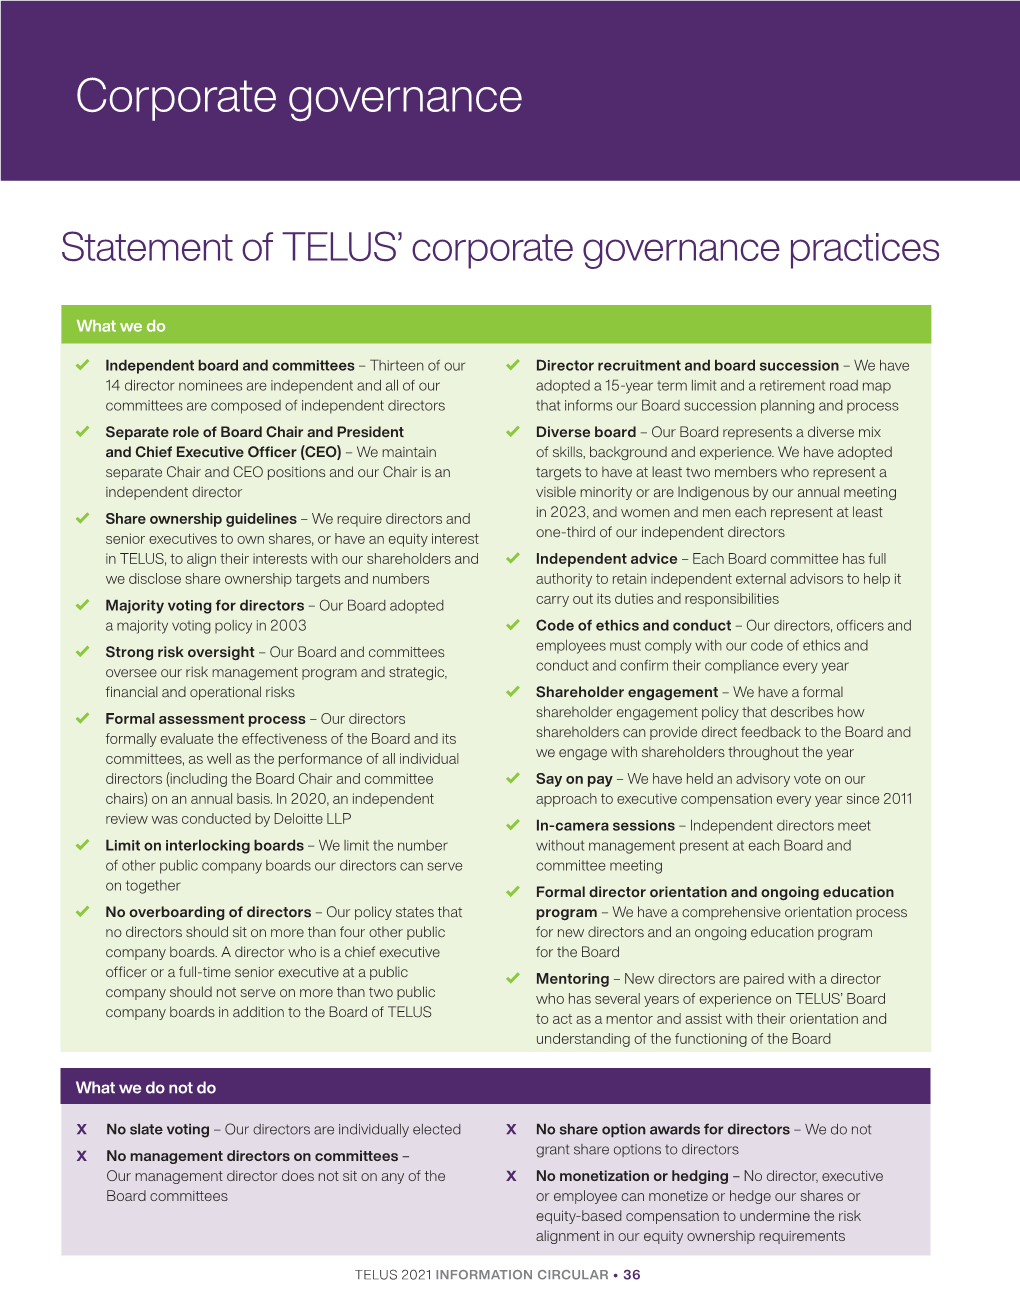 Statement of TELUS' Corporate Governance Practices